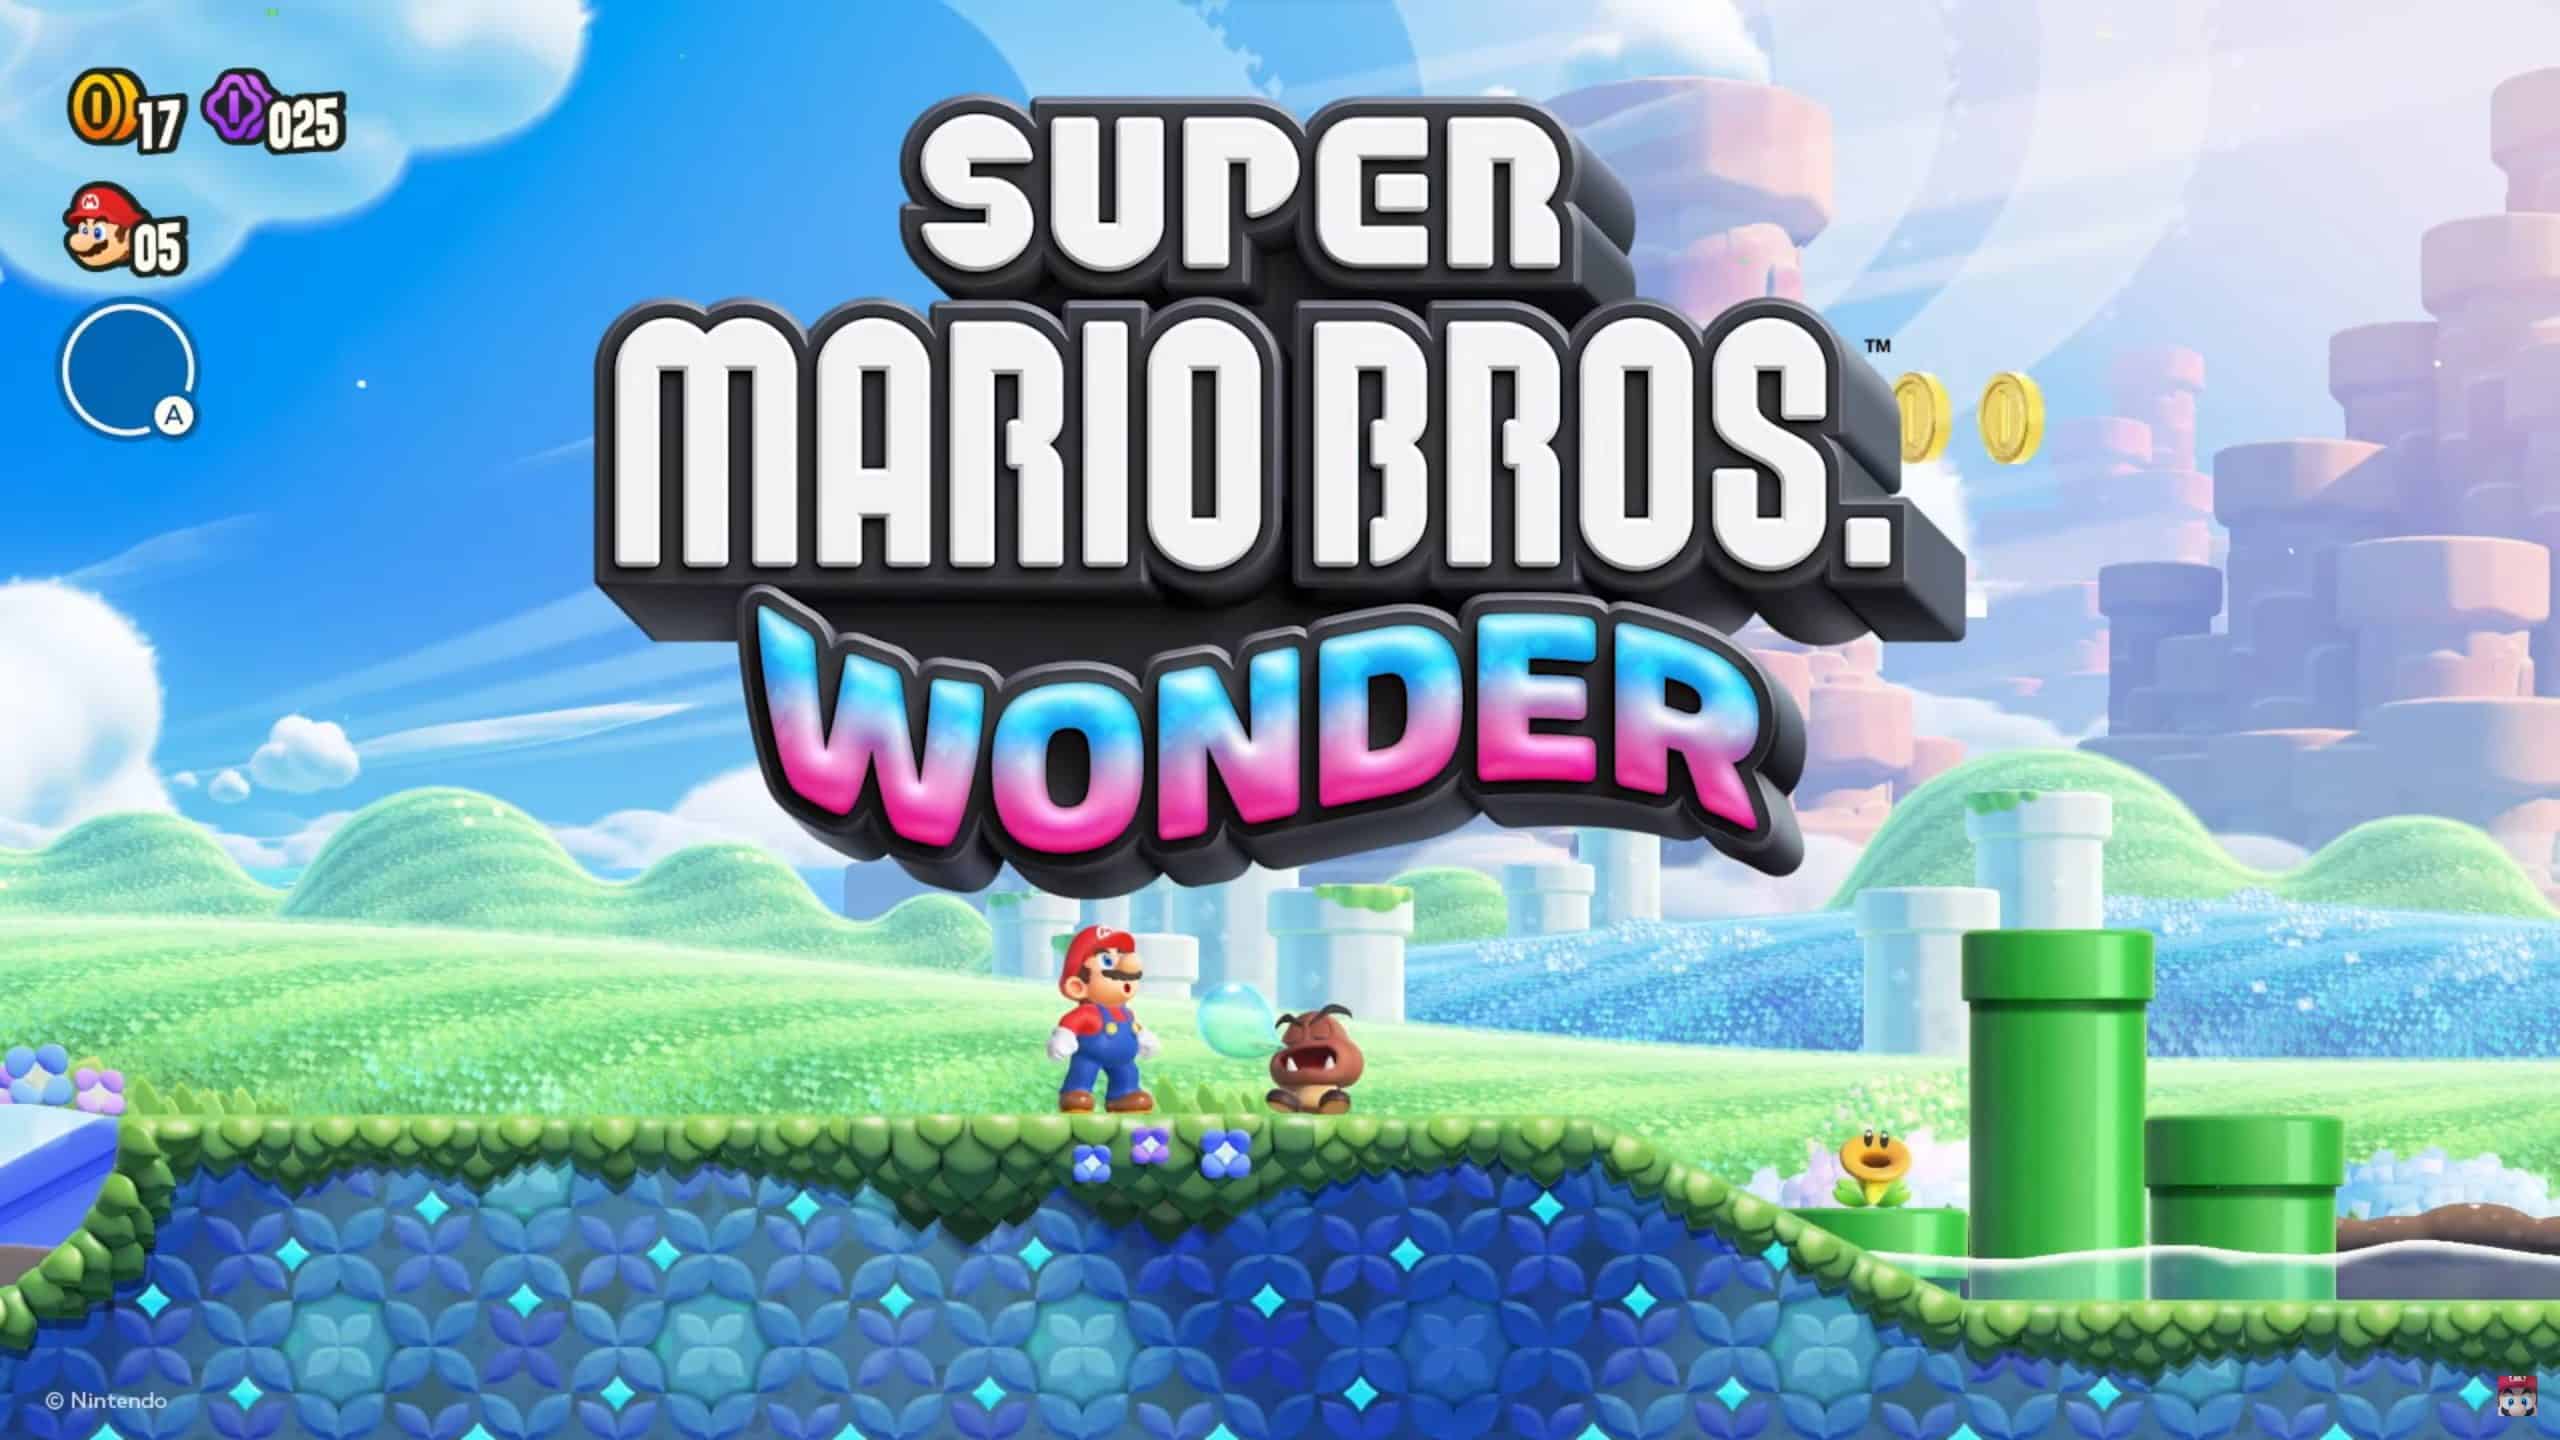 Super Mario Bros. Wonder: A Legend Returns